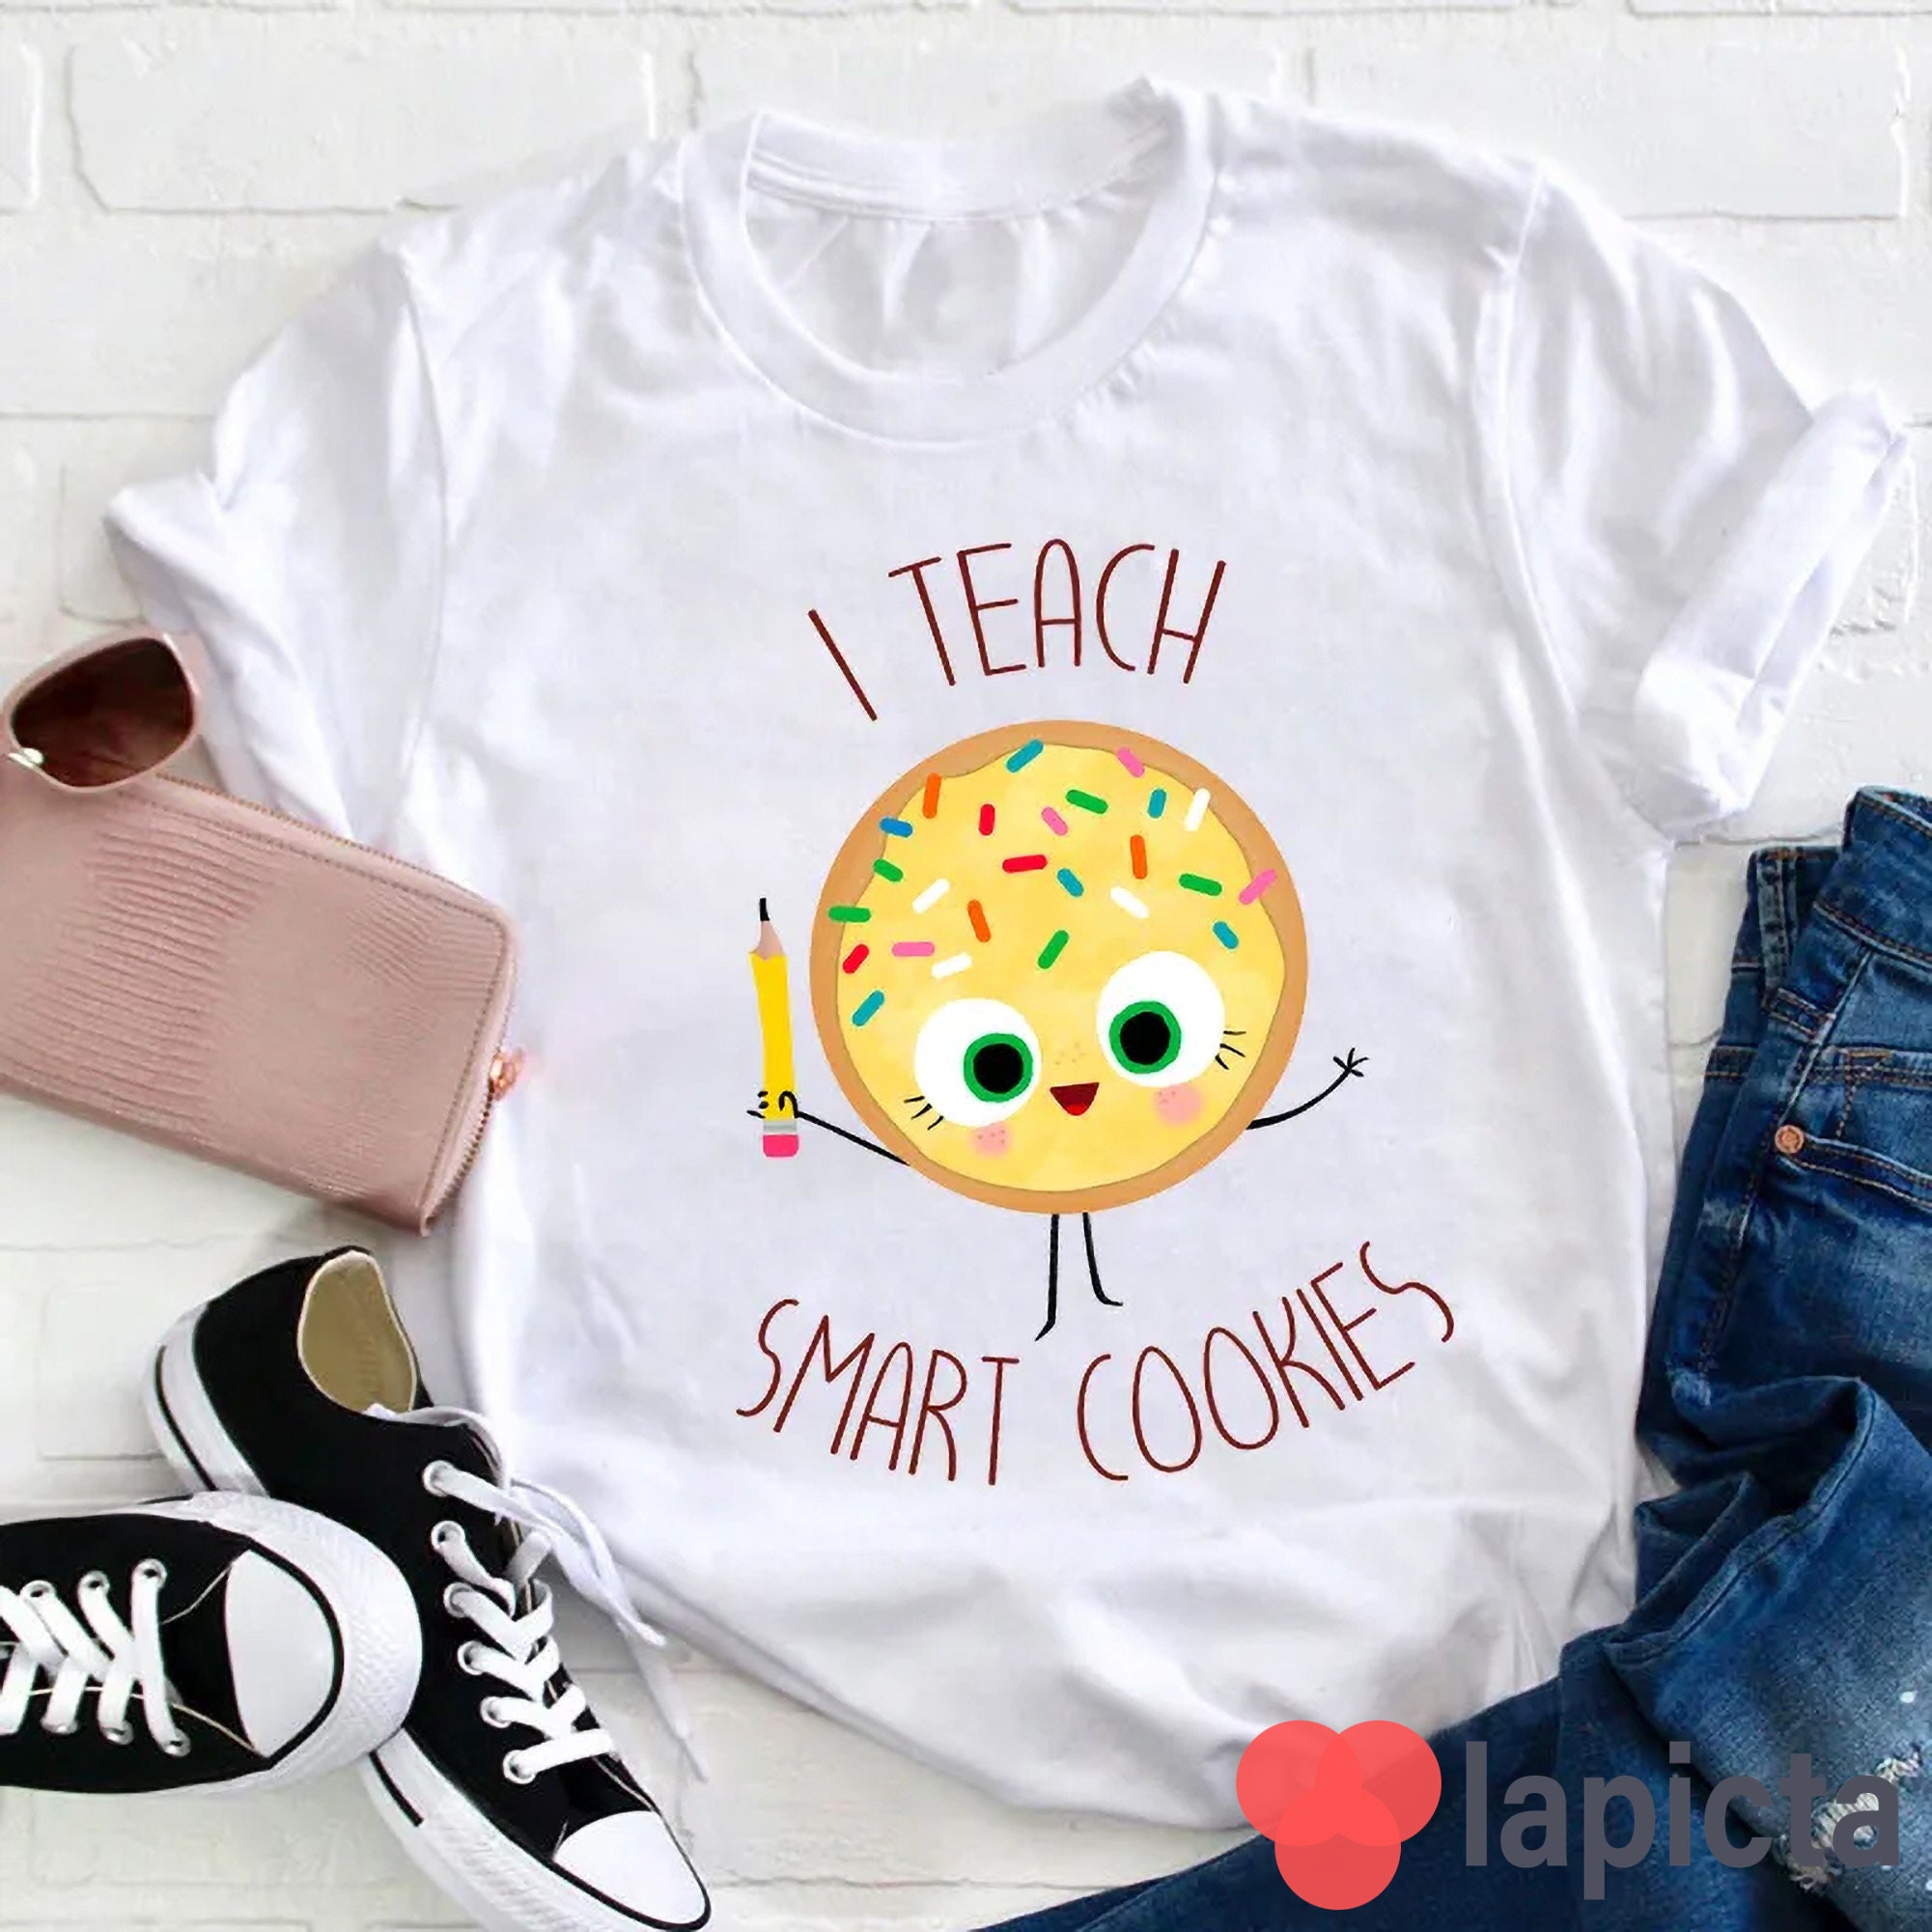 Oven Mitt “Smart Cookie” Teacher Gift Idea - Just Add Confetti